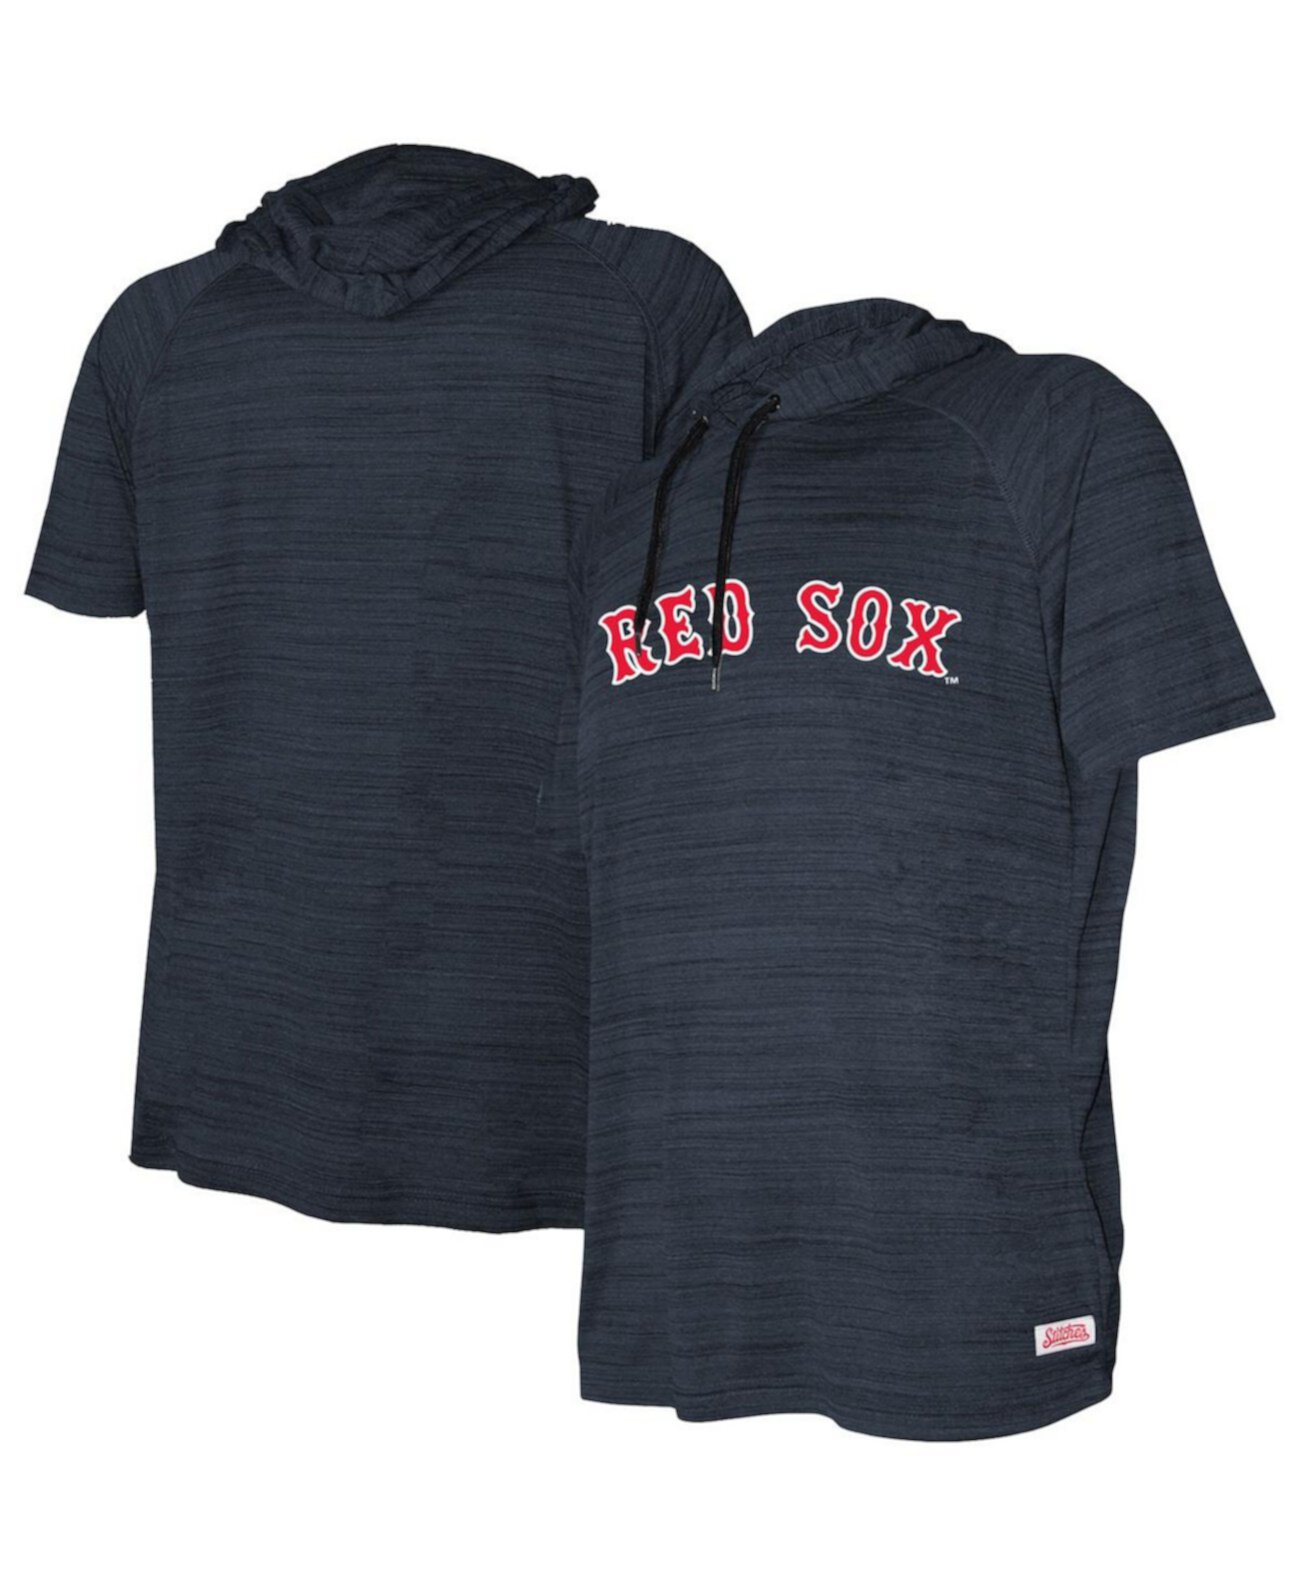 Пуловер с короткими рукавами и капюшоном с короткими рукавами и регланами для больших мальчиков и девочек Heather Navy Boston Red Sox Stitches